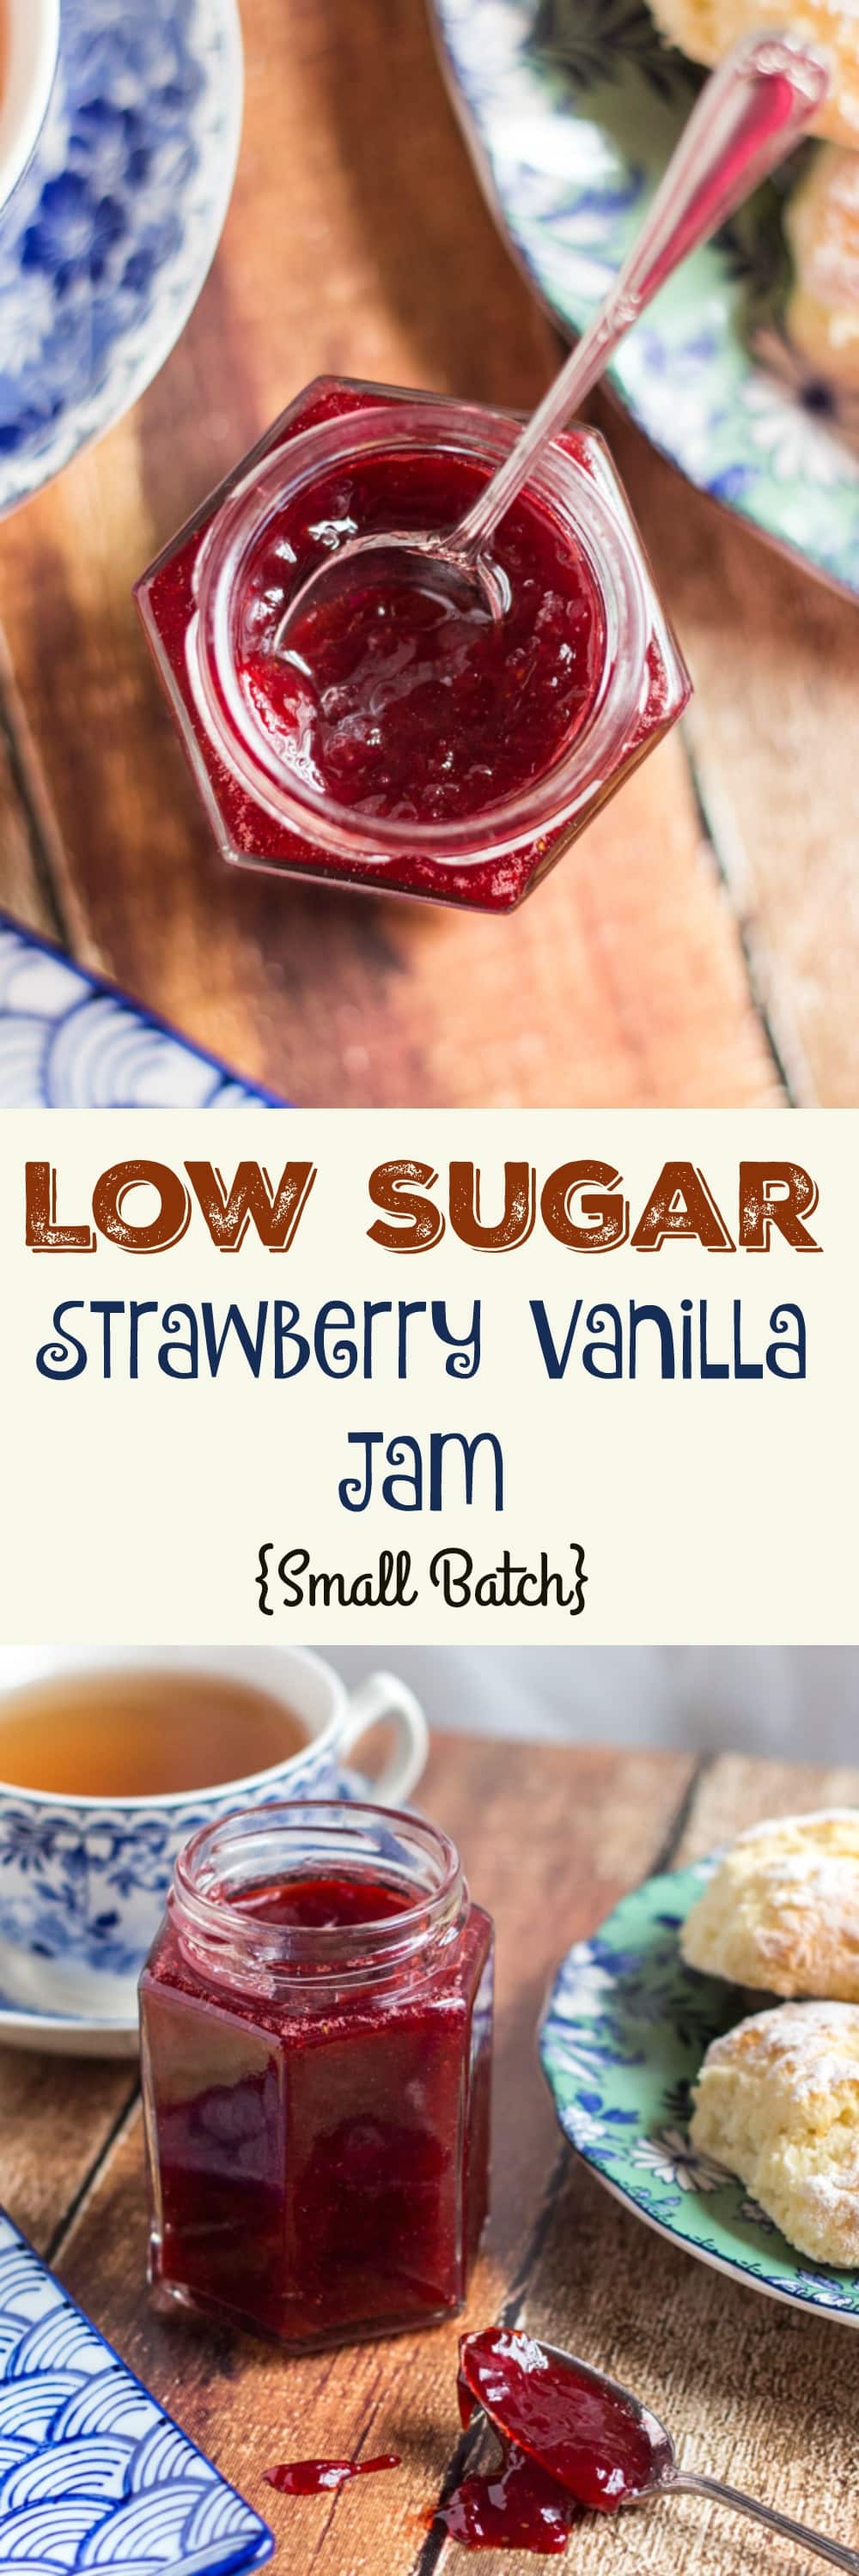 Low Sugar Strawberry Vanilla Jam {Small Batch}. Taste the fruit, not just the sugar.